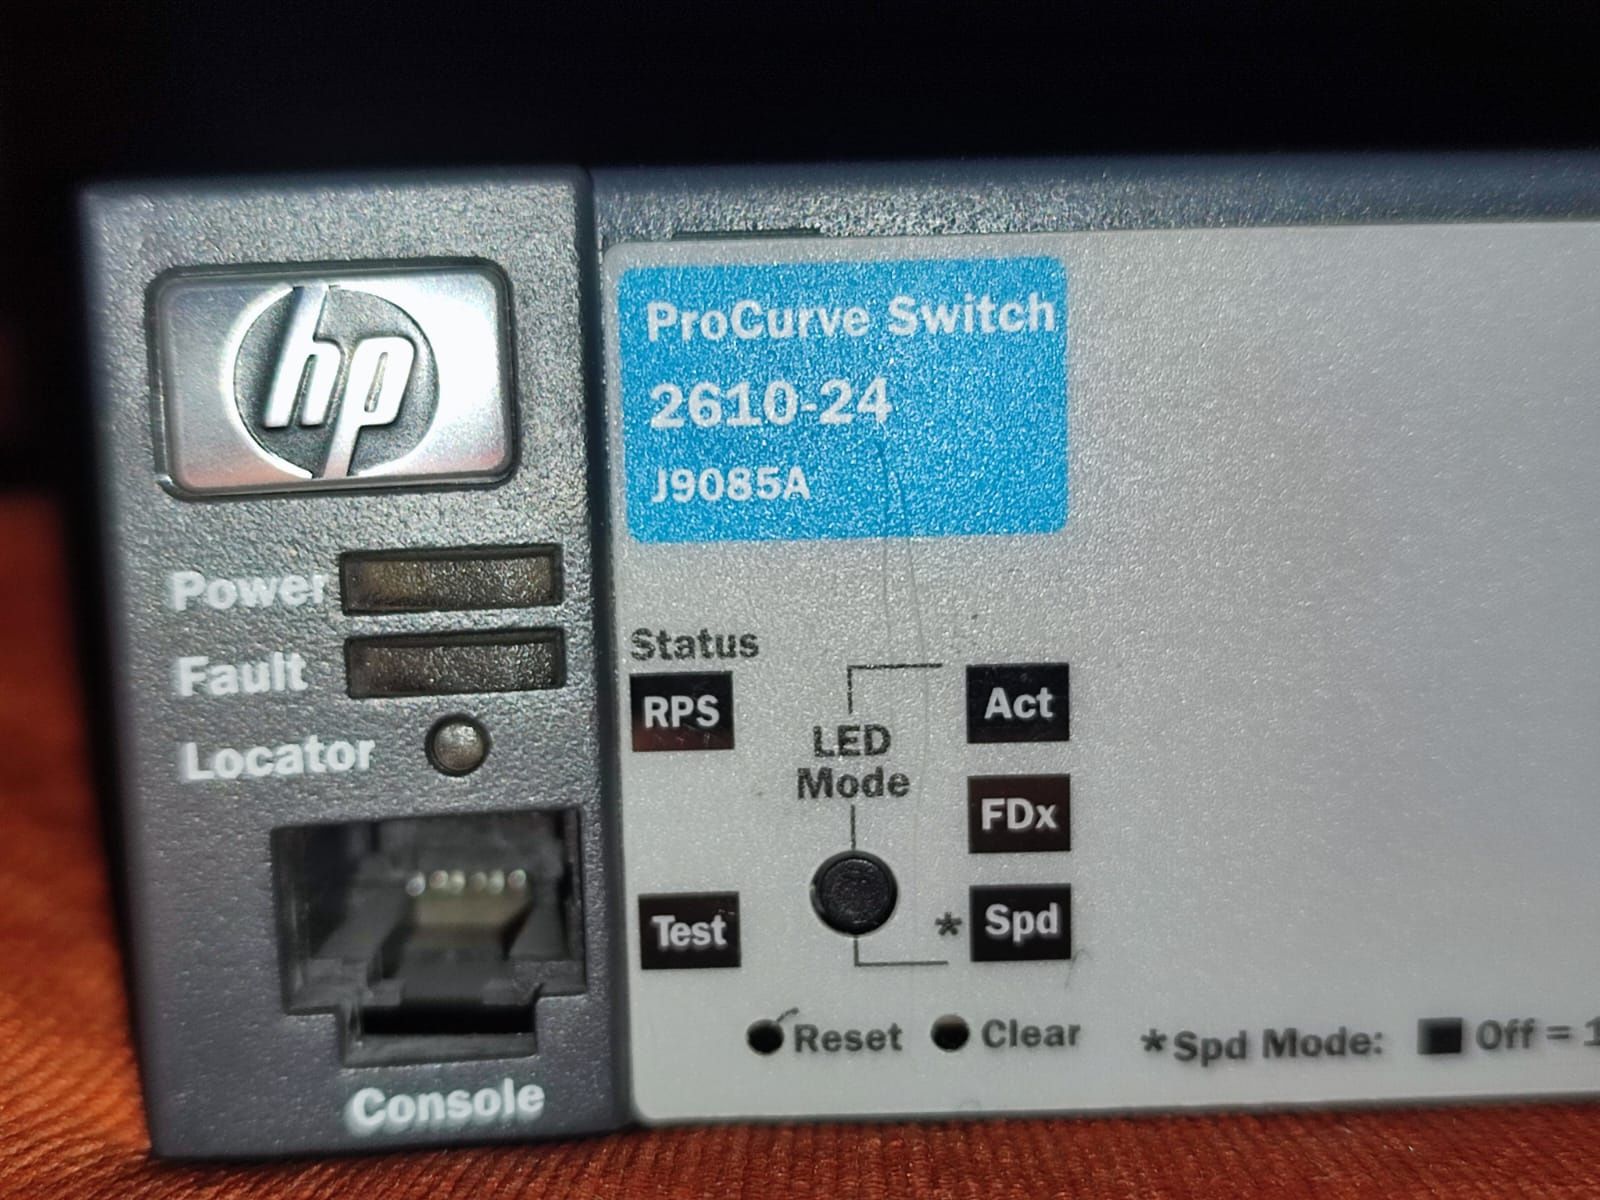 Switch HP ProCurve J9085A 2610-24